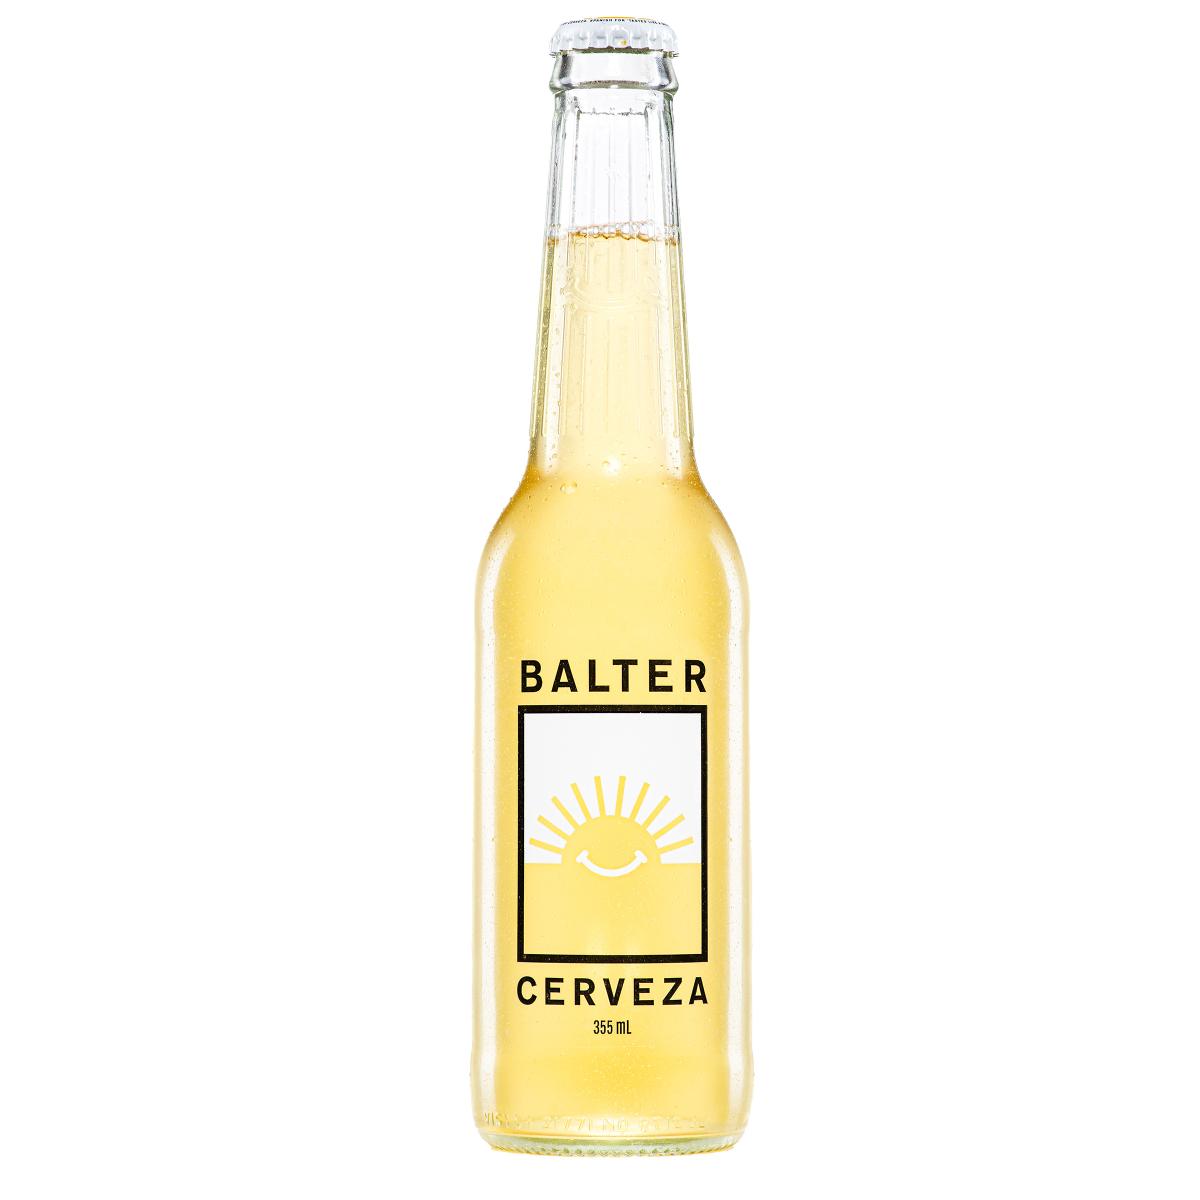 Balter Cerveza Bottle 355mL